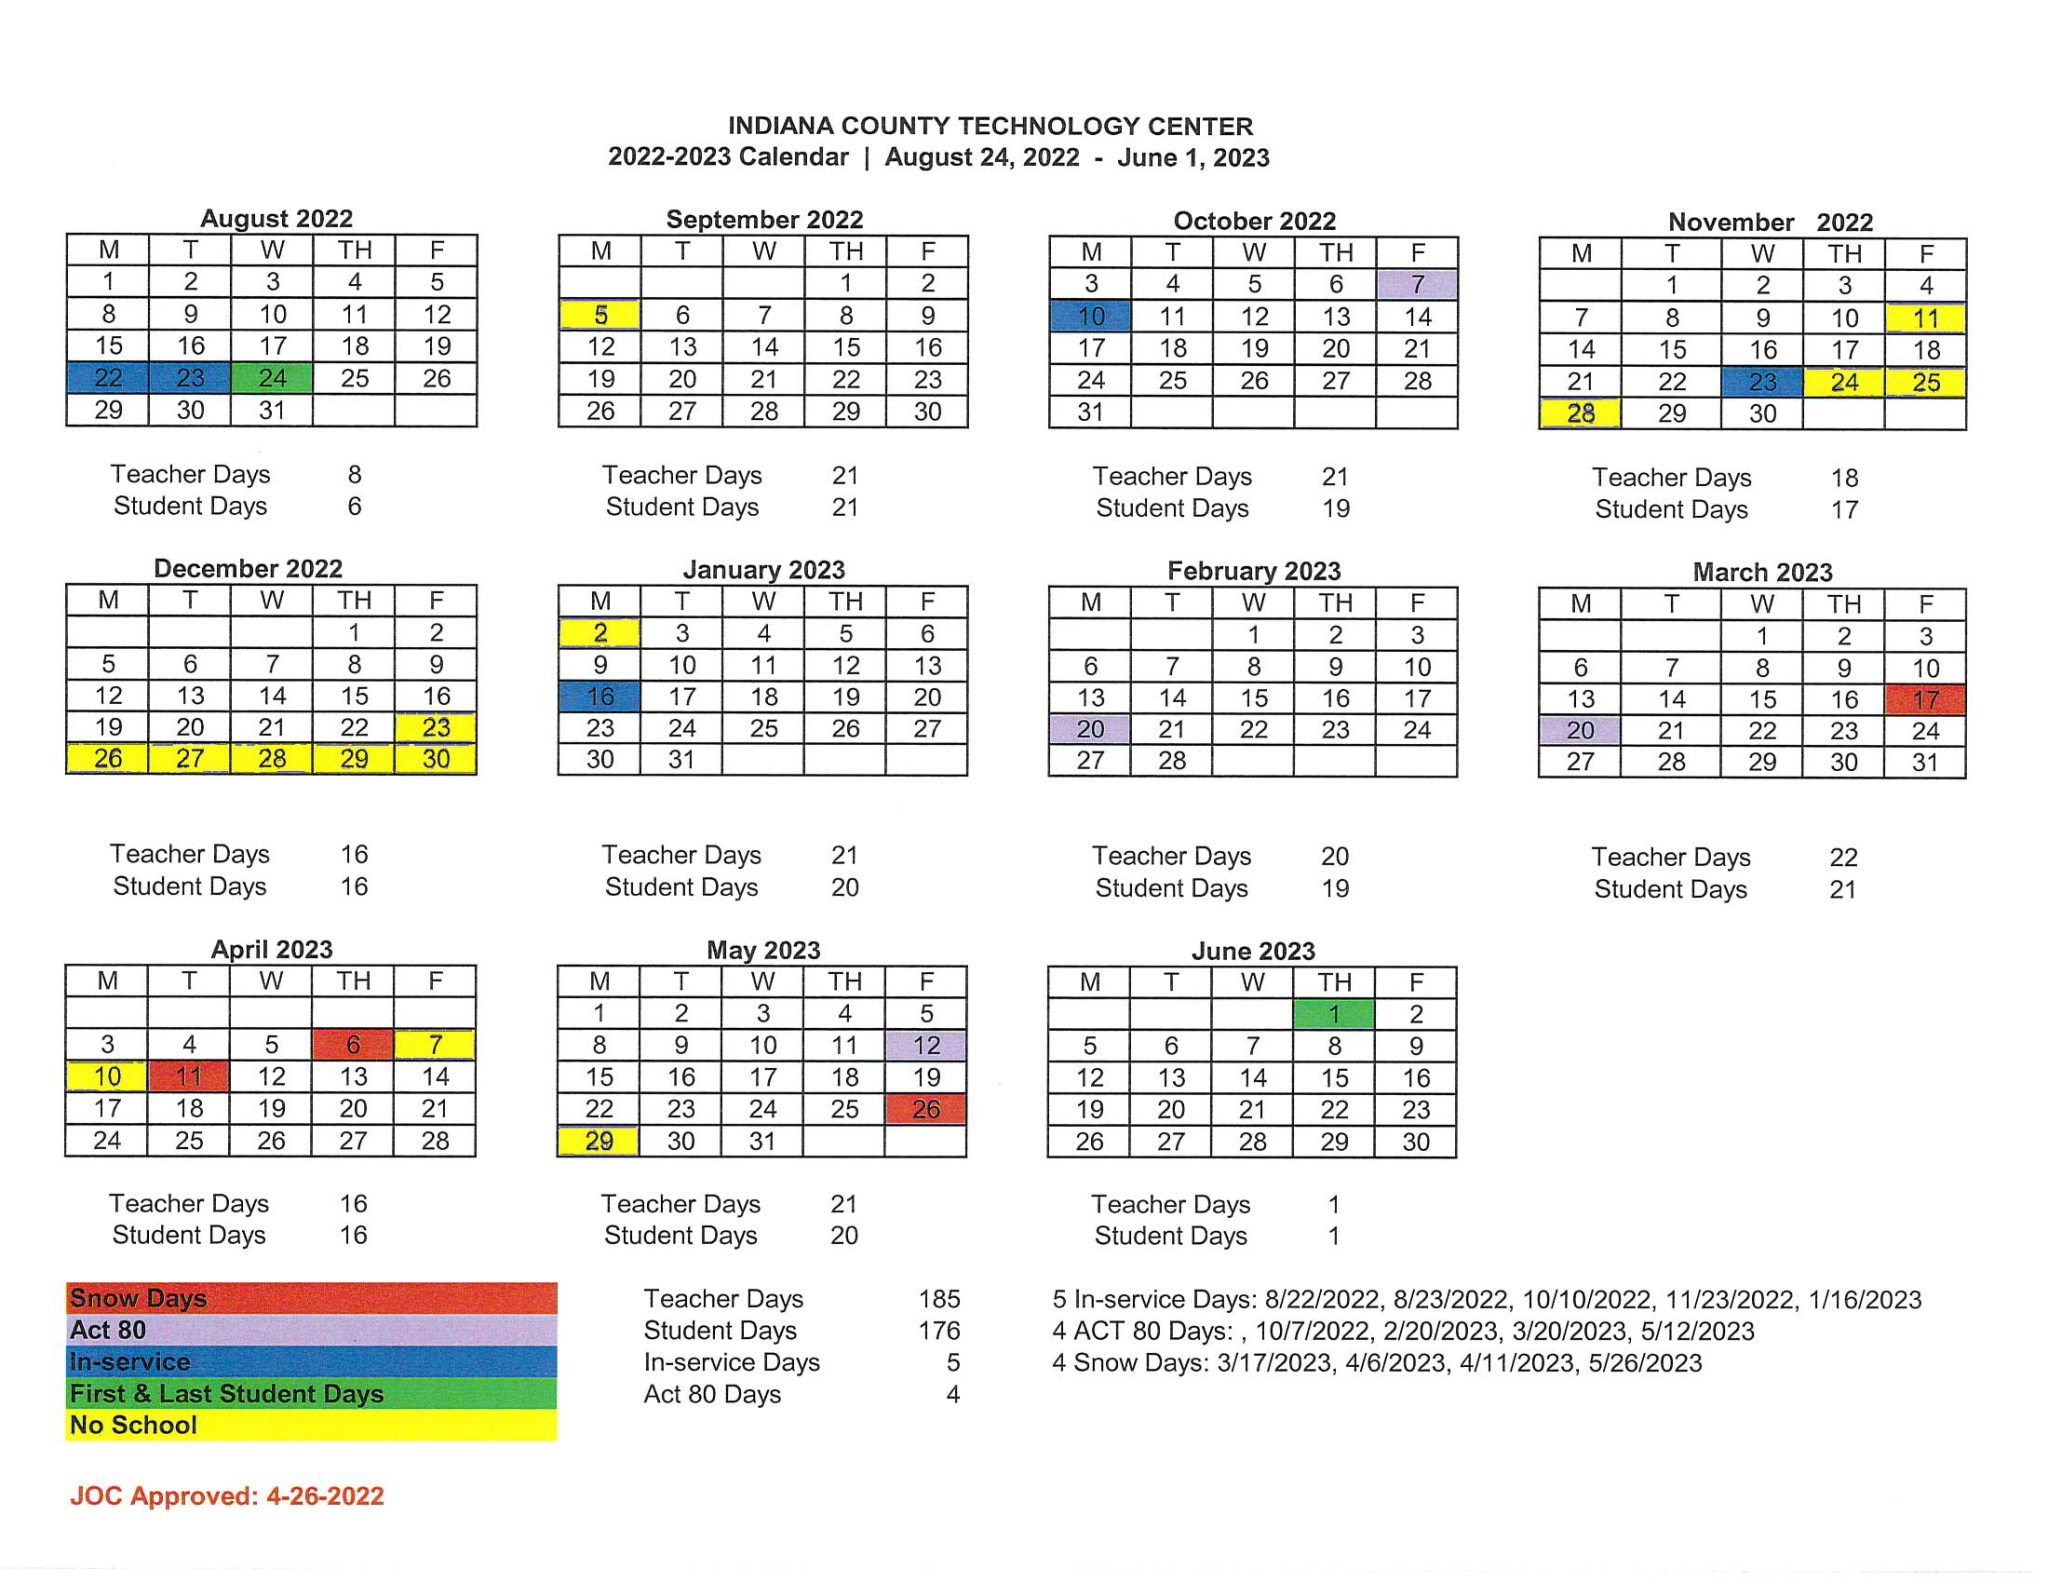 ICTC 2022 2023 Calendar August 24 2022 June 1 2023 ICTC